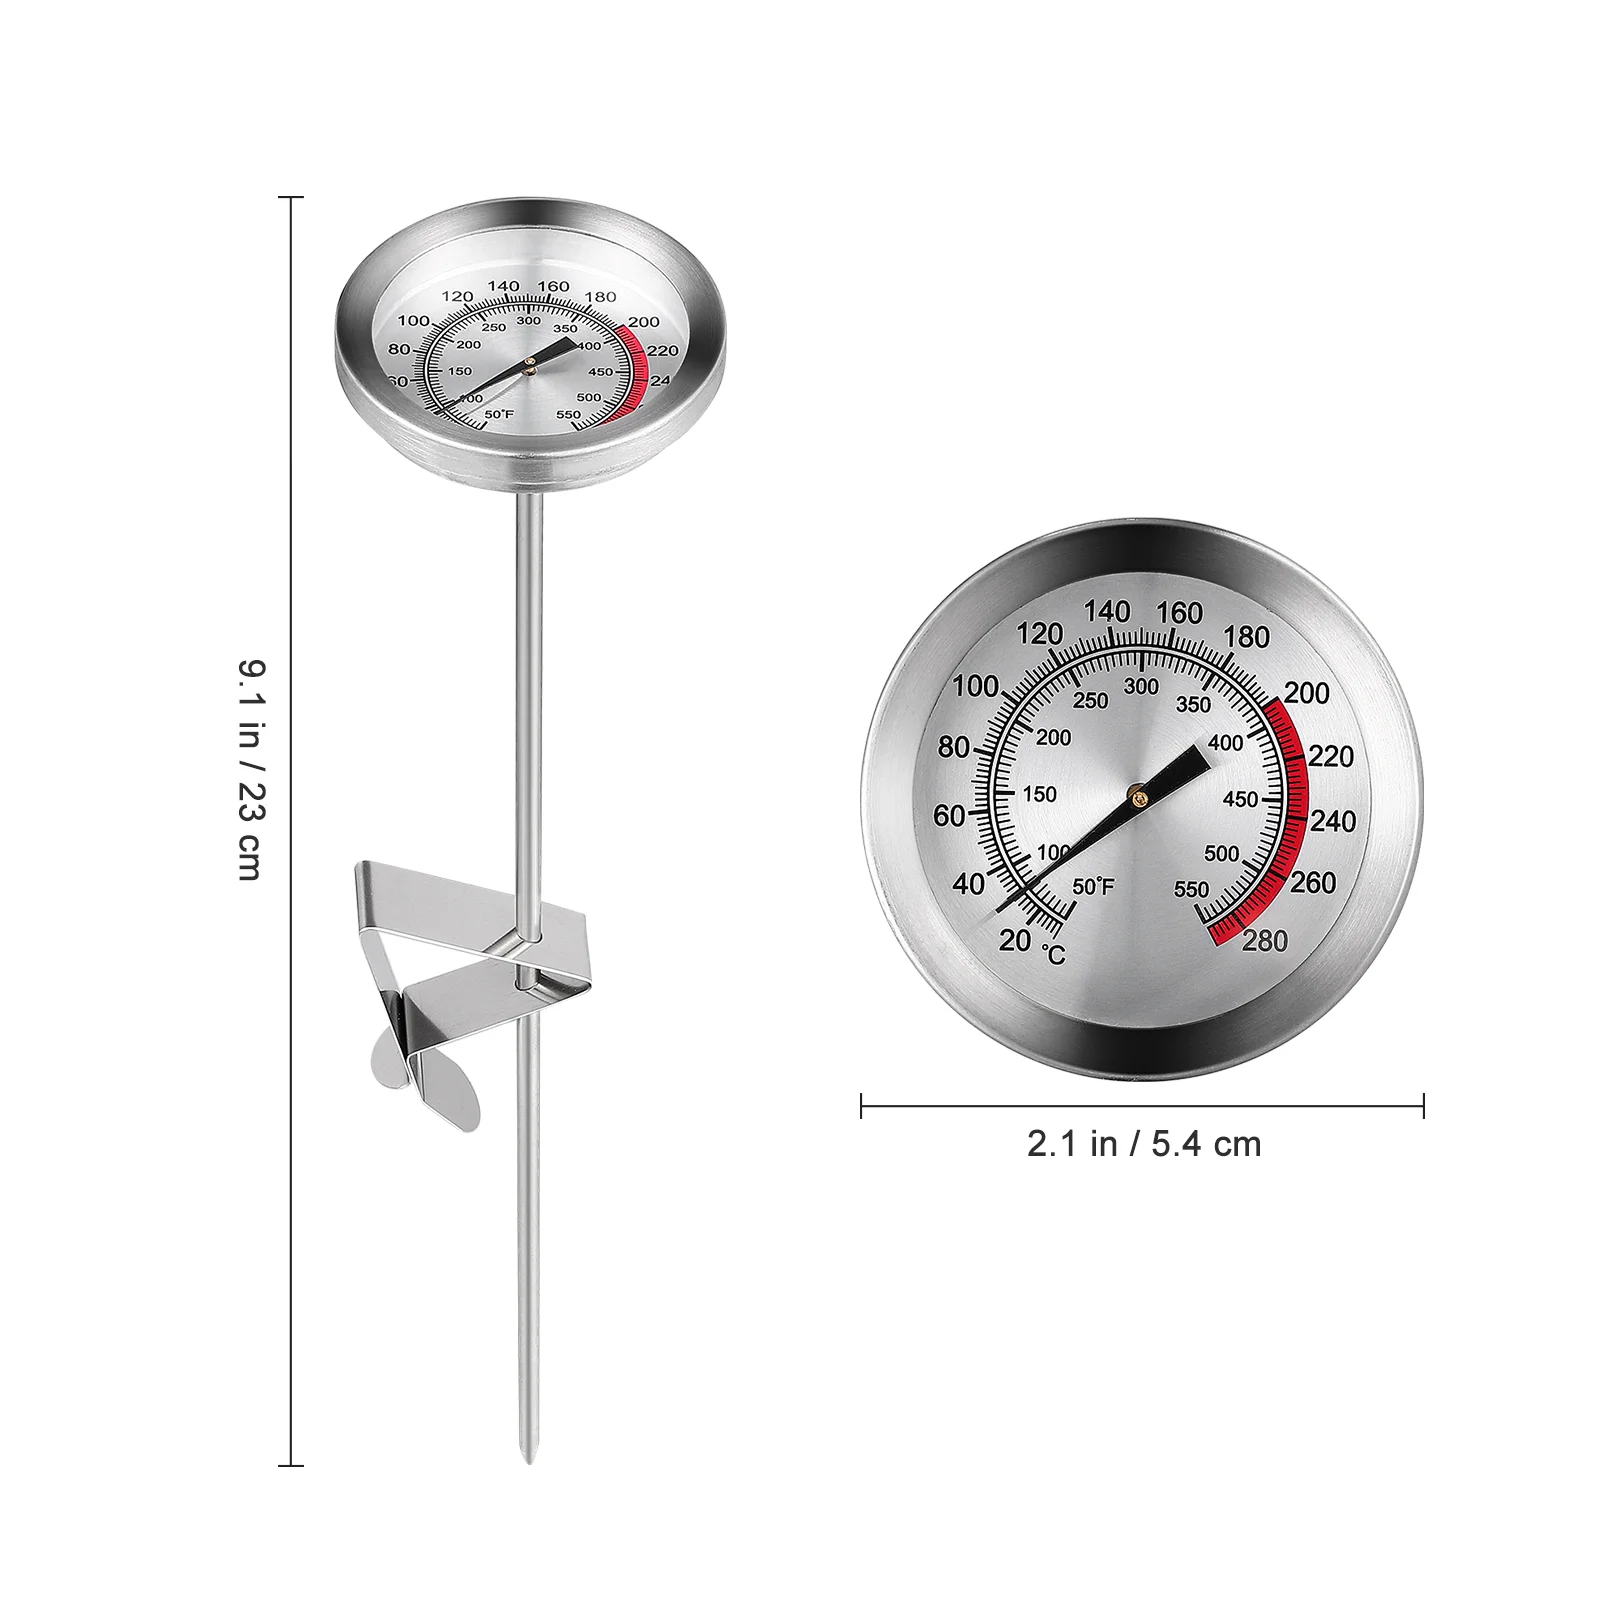 Кулинарный Термометр Кухонный Термометр для Мяса, считывающий Показания Термометра, Зонд Из Нержавеющей Стали, Термометр Для жарки Индейки, Термометр Изображение 1